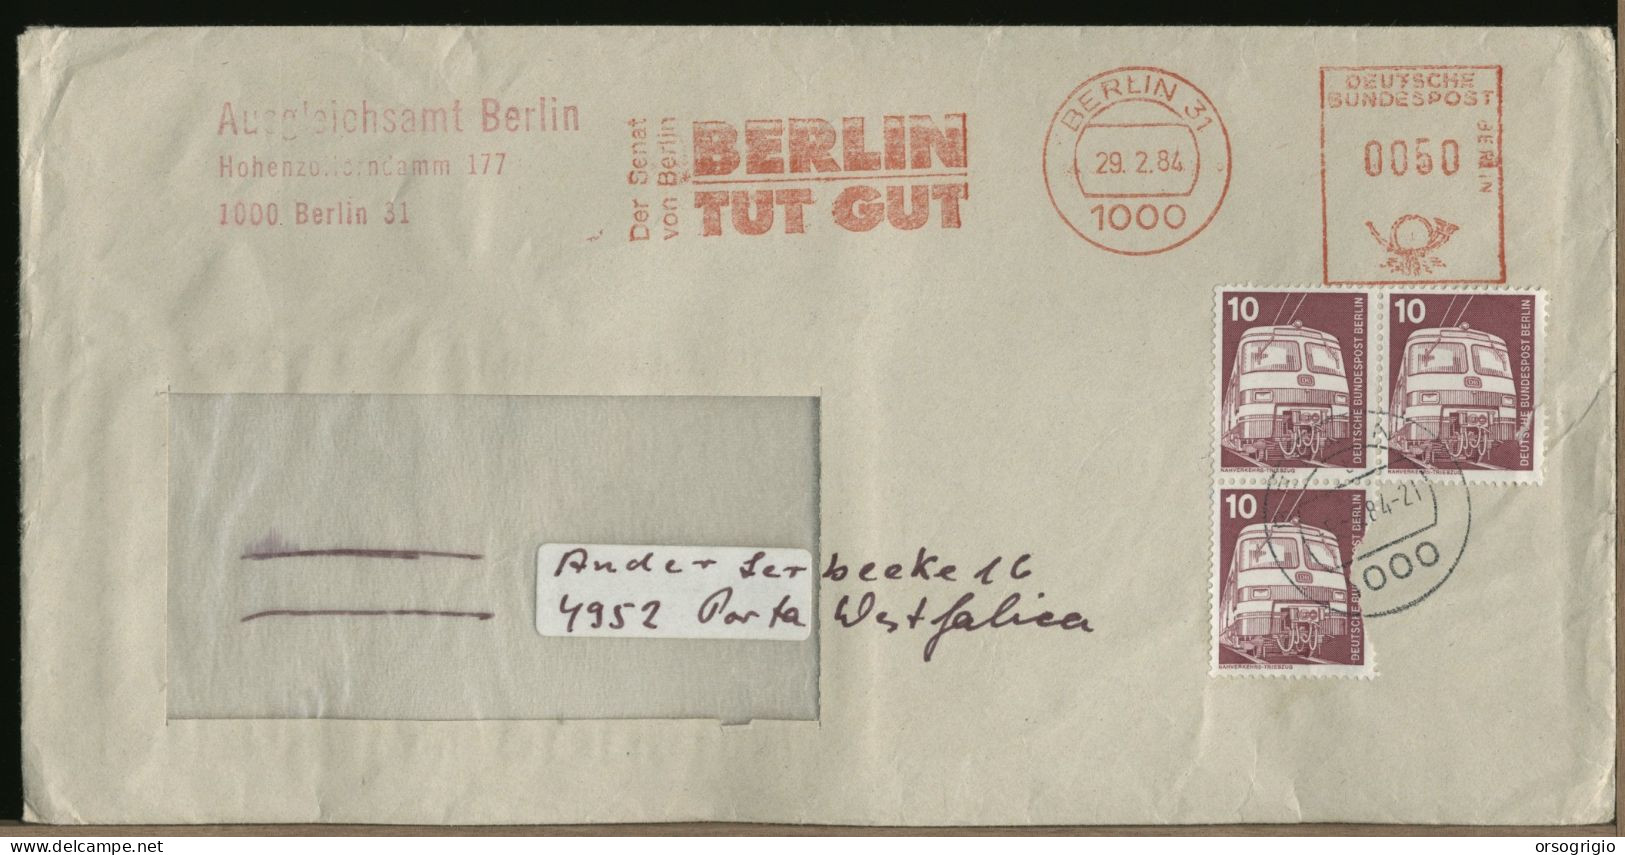 GERMANY - DEUTSCHE - BERLIN - 1984 - TUT GUT - Franking Machines (EMA)